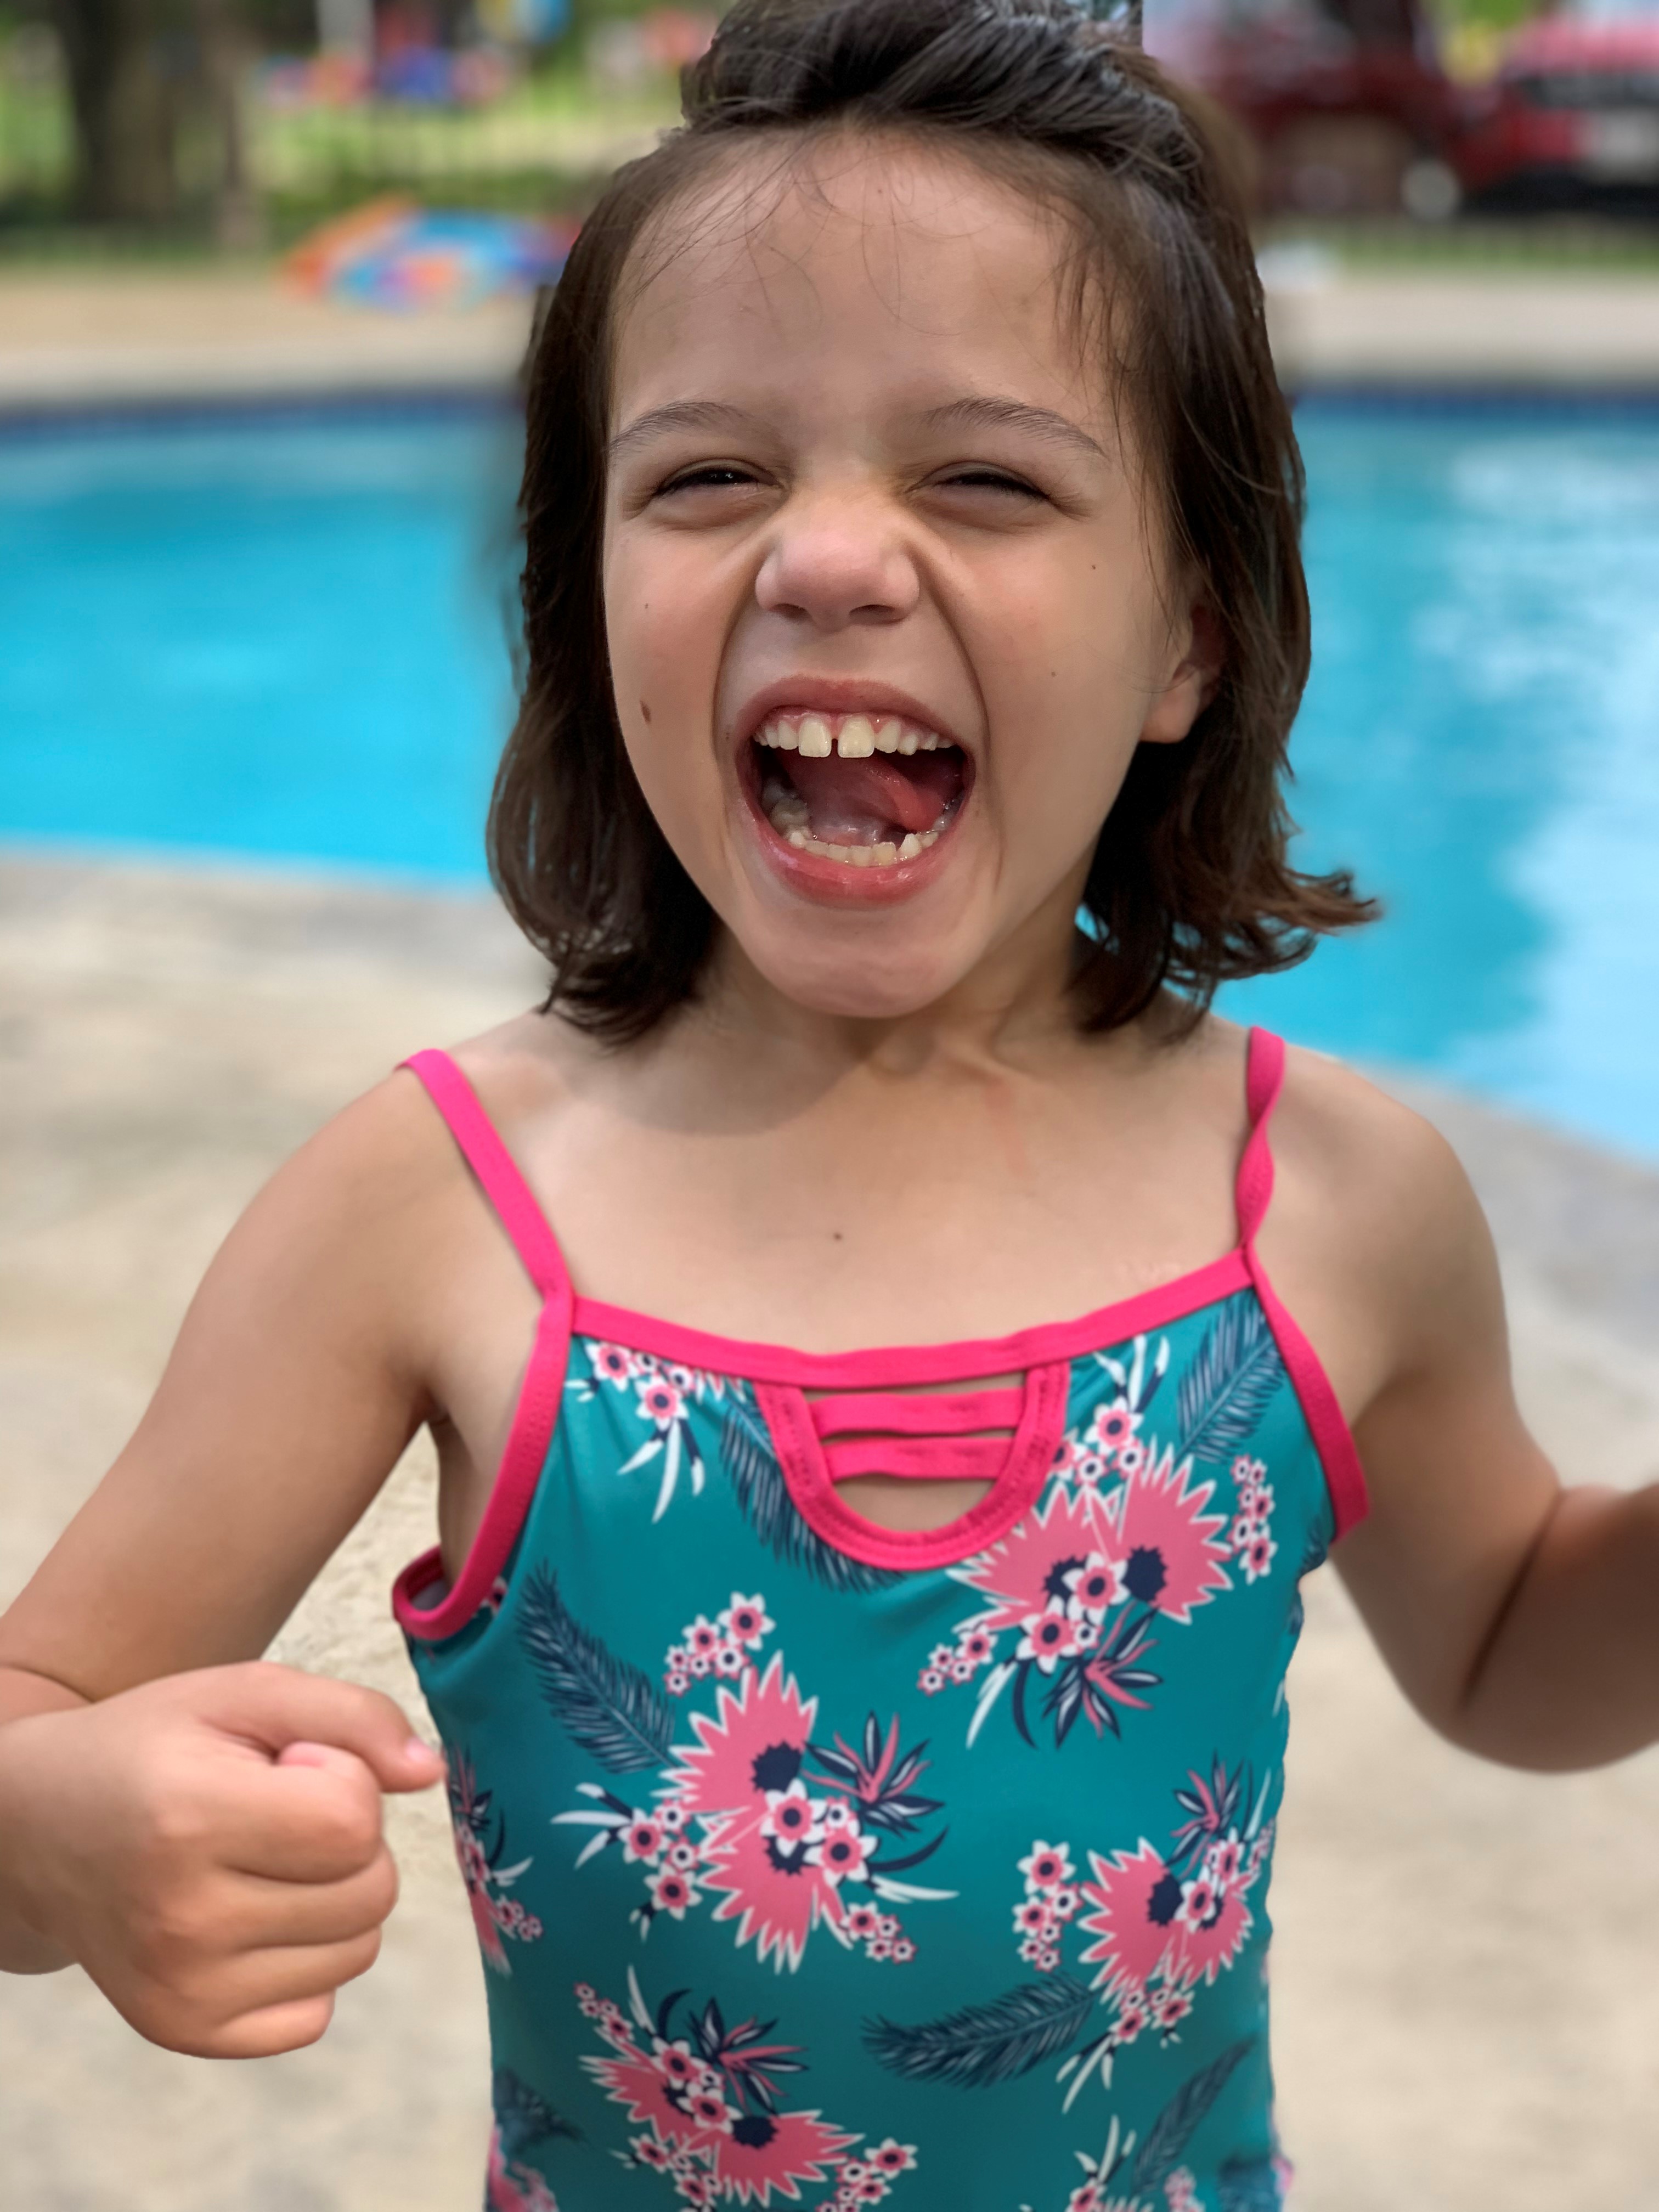 Cassandra big smile by pool